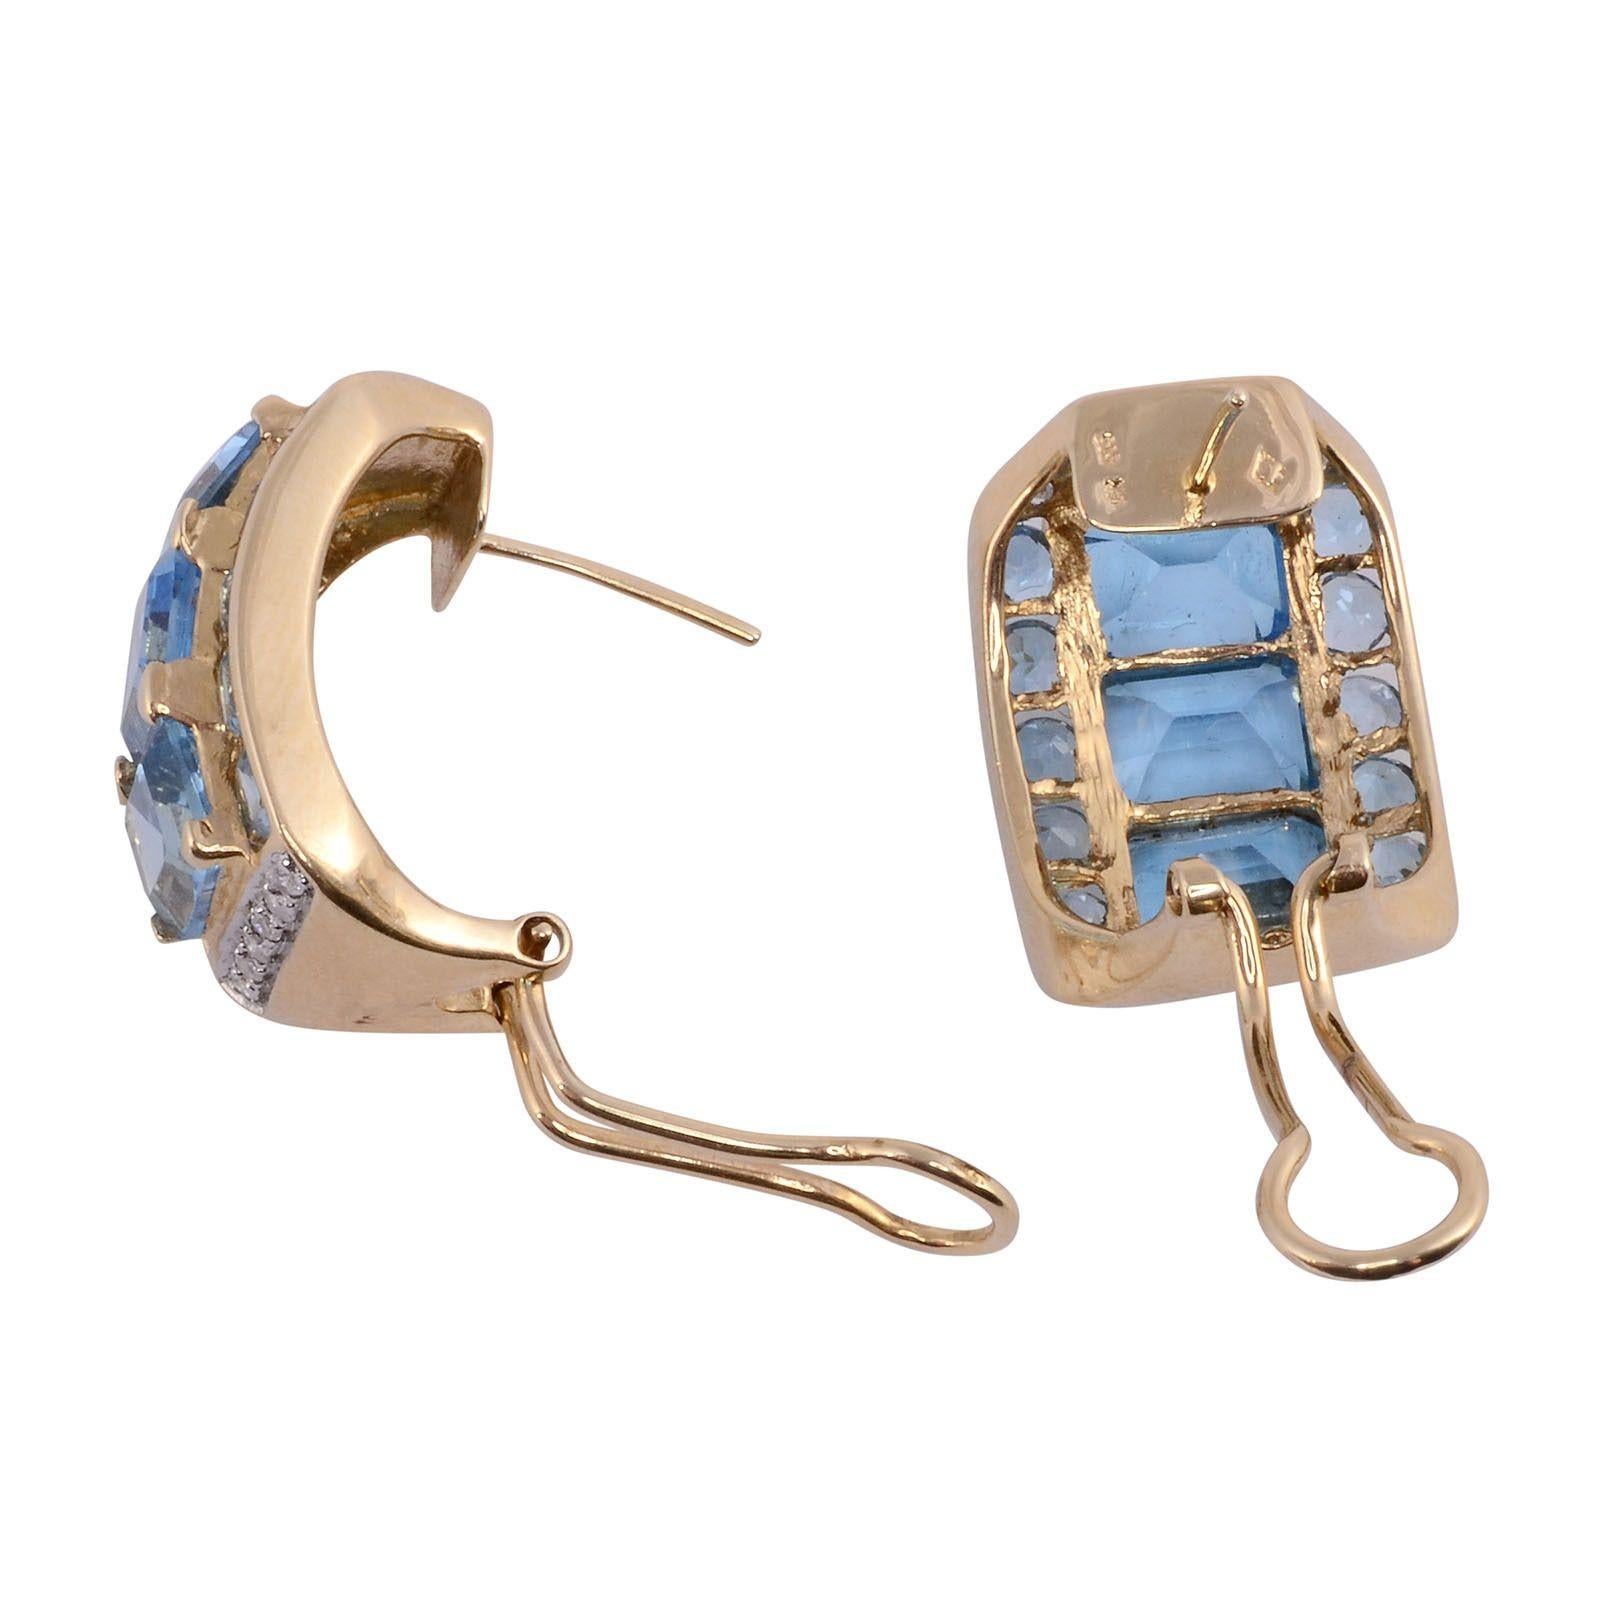 Estate emerald cut blue topaz earrings. These 14 karat yellow gold earrings feature six emerald cut blue topaz accented with 20 round blue topaz and 24 tiny round diamonds. [SJ 2280 P]
Dimensions
 
1″H x .62″W x .20″D